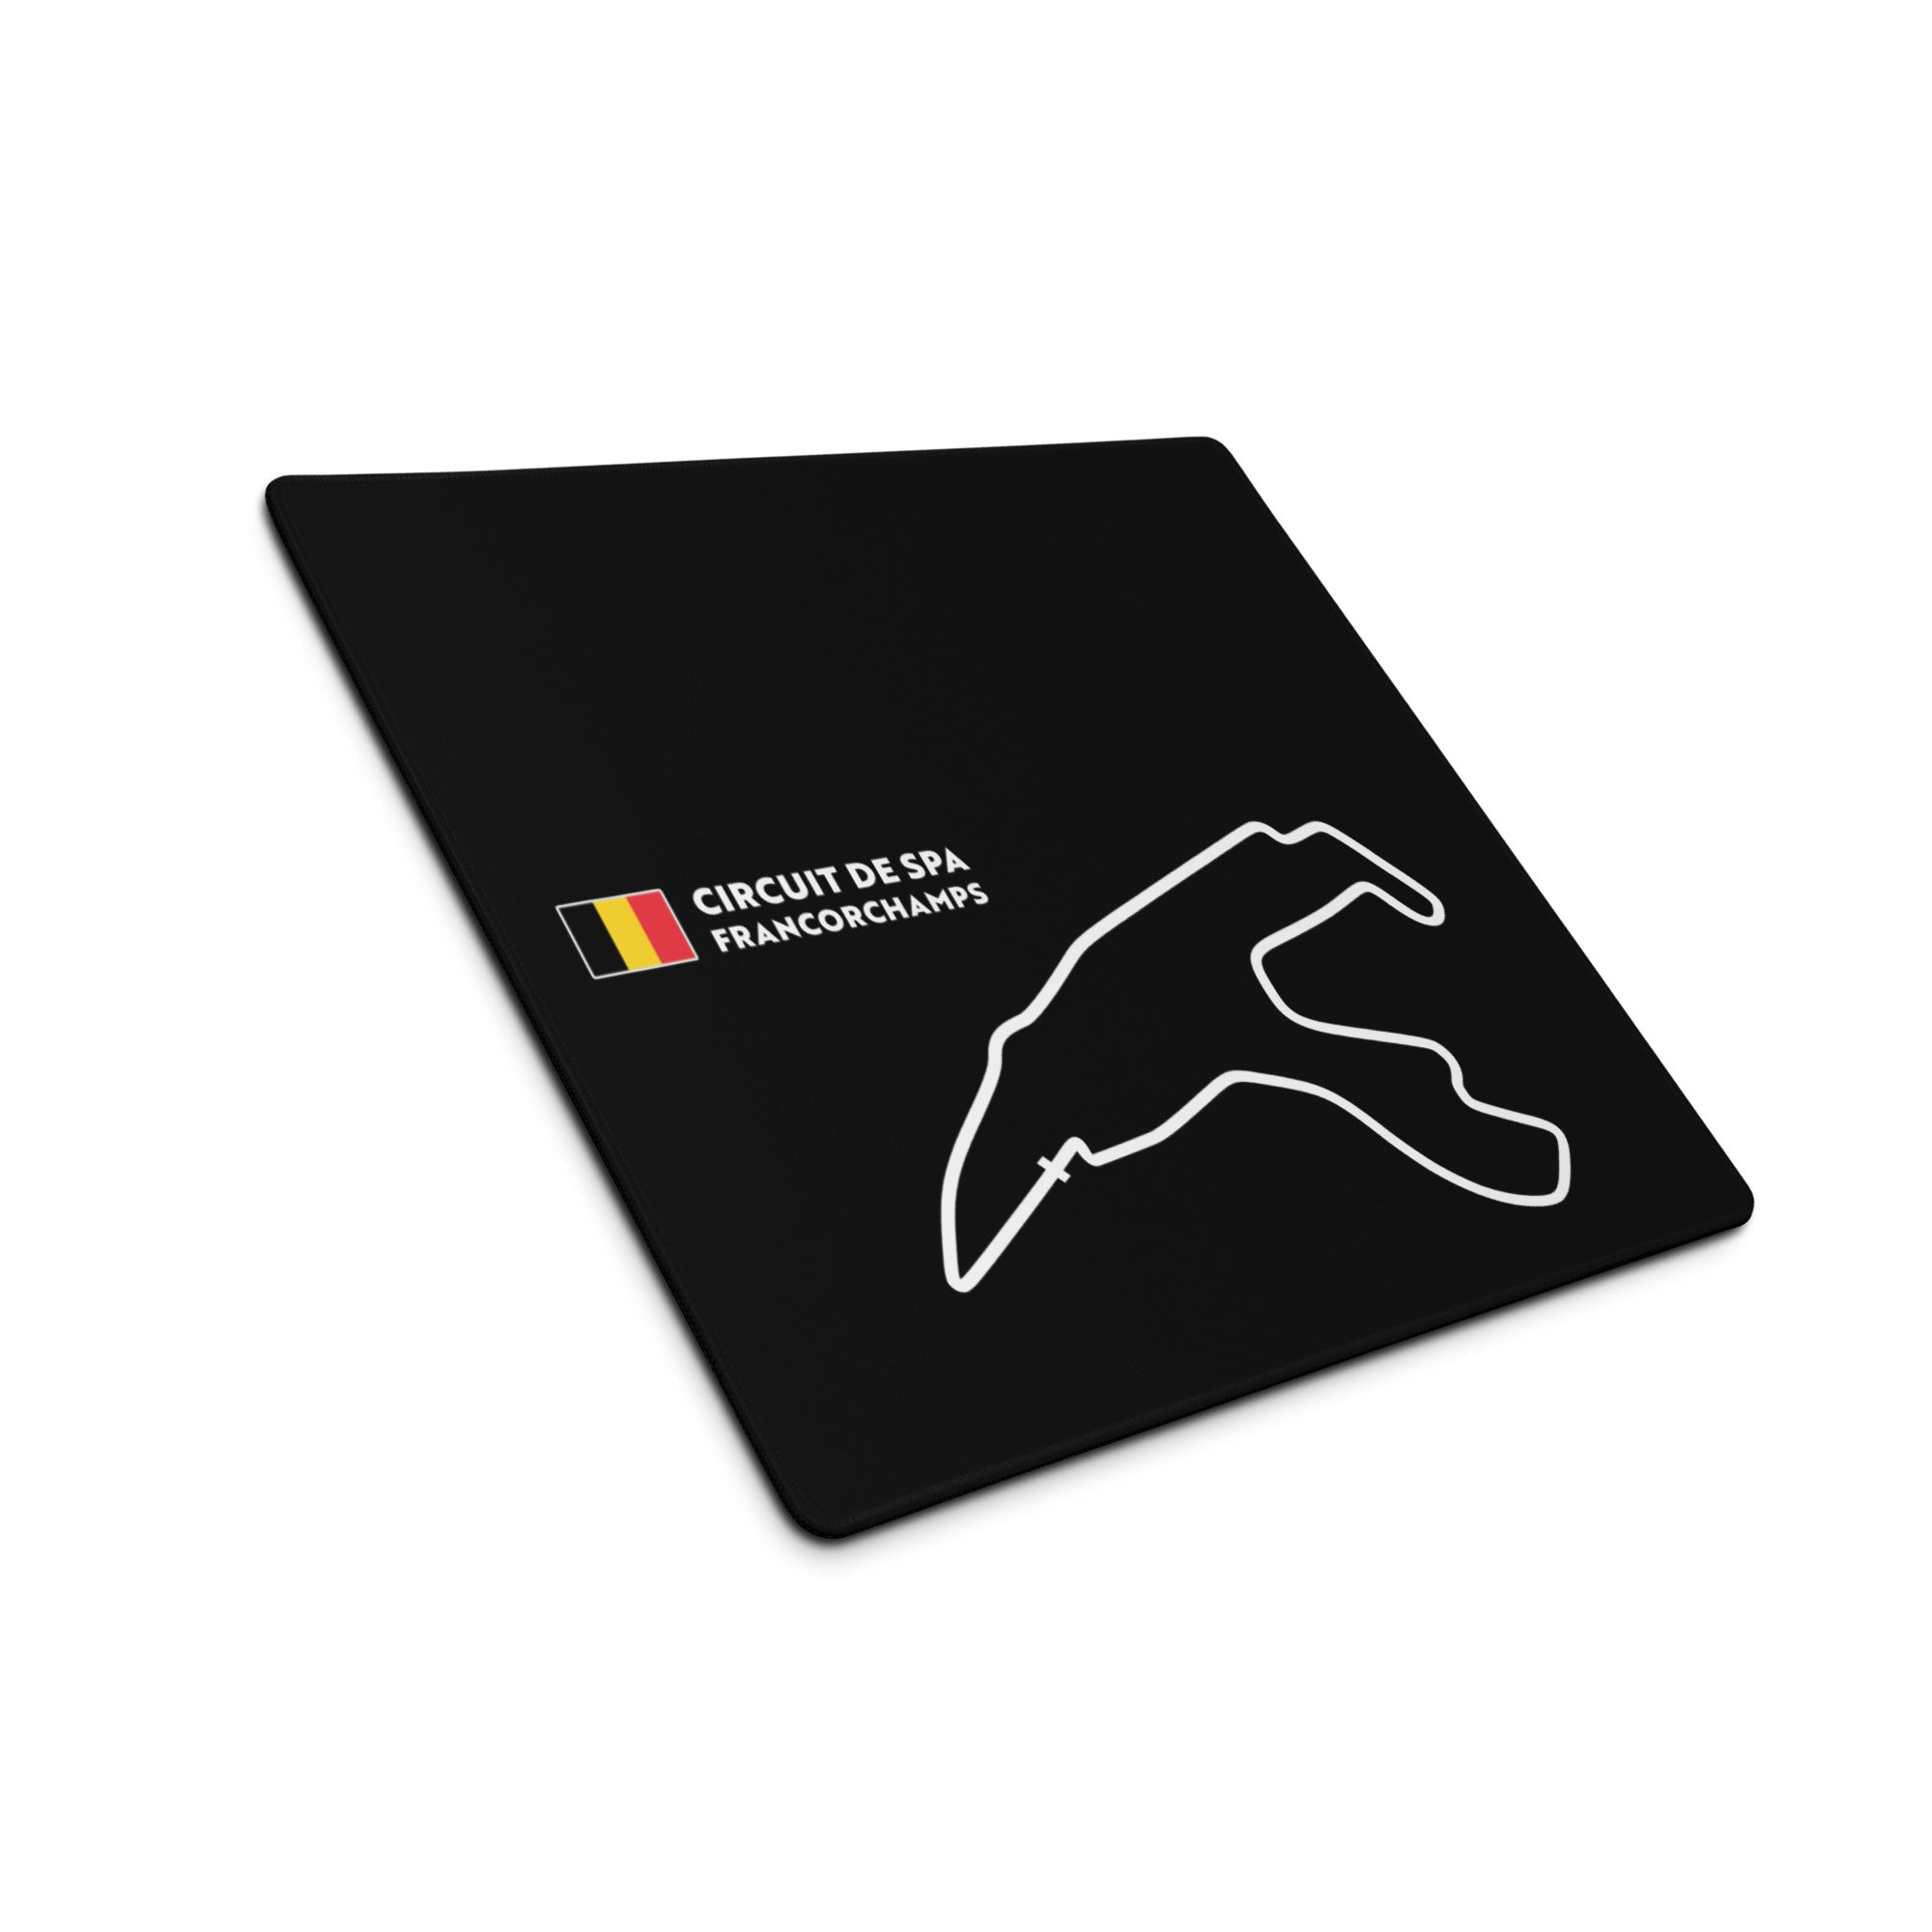 spa francorchamps Belgium grand prix f1 historic race track circuit black mouse pad square